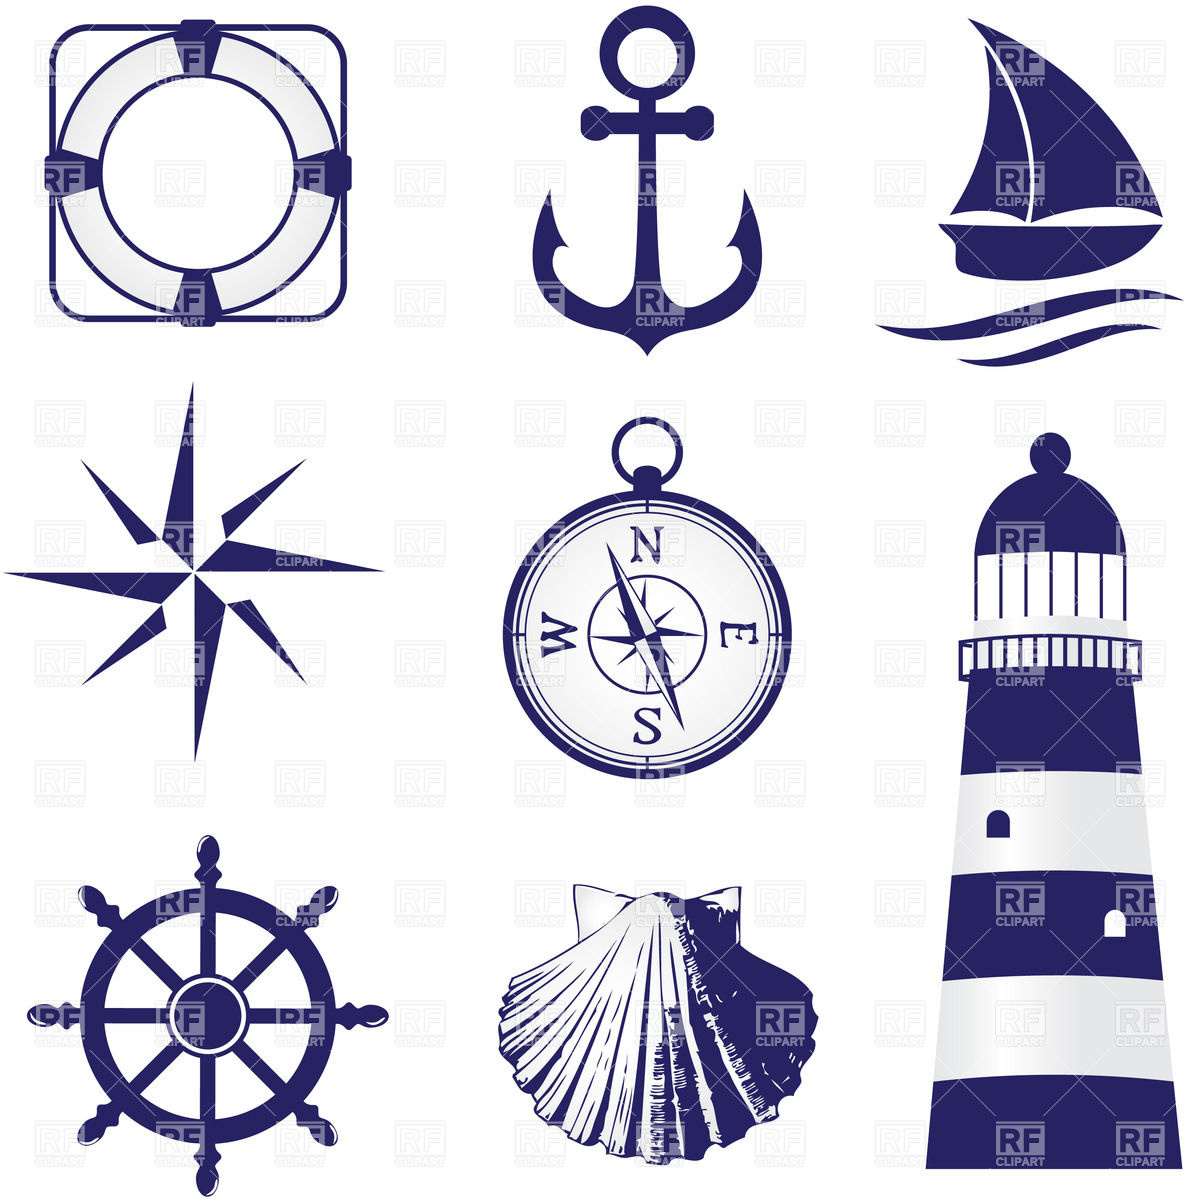 Free Nautical Clip Art ..